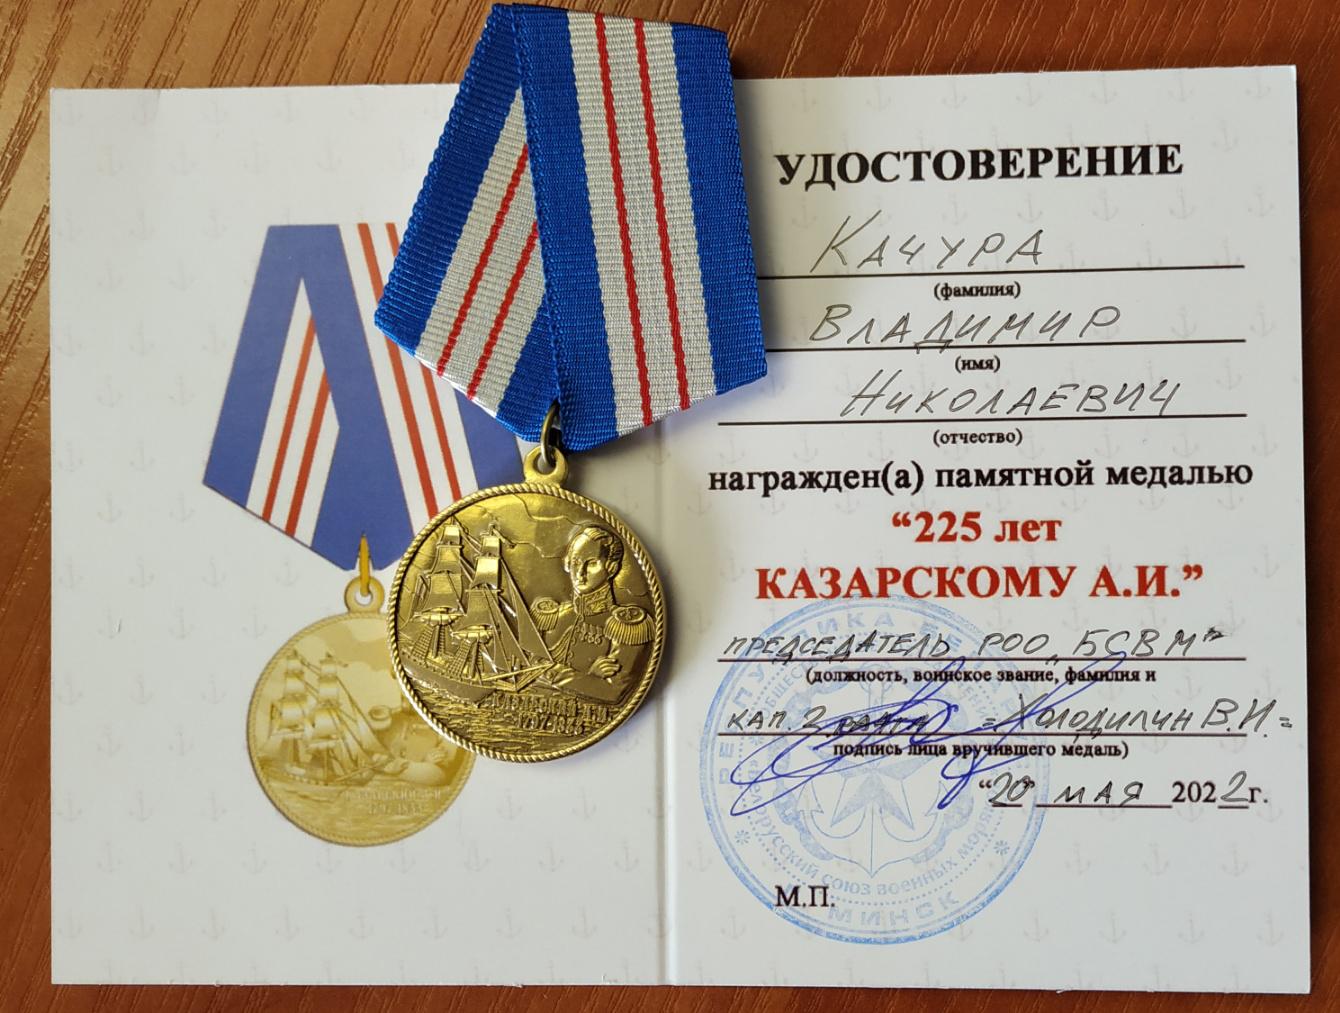 Памятная медаль "225 лет Казарскому А.И."